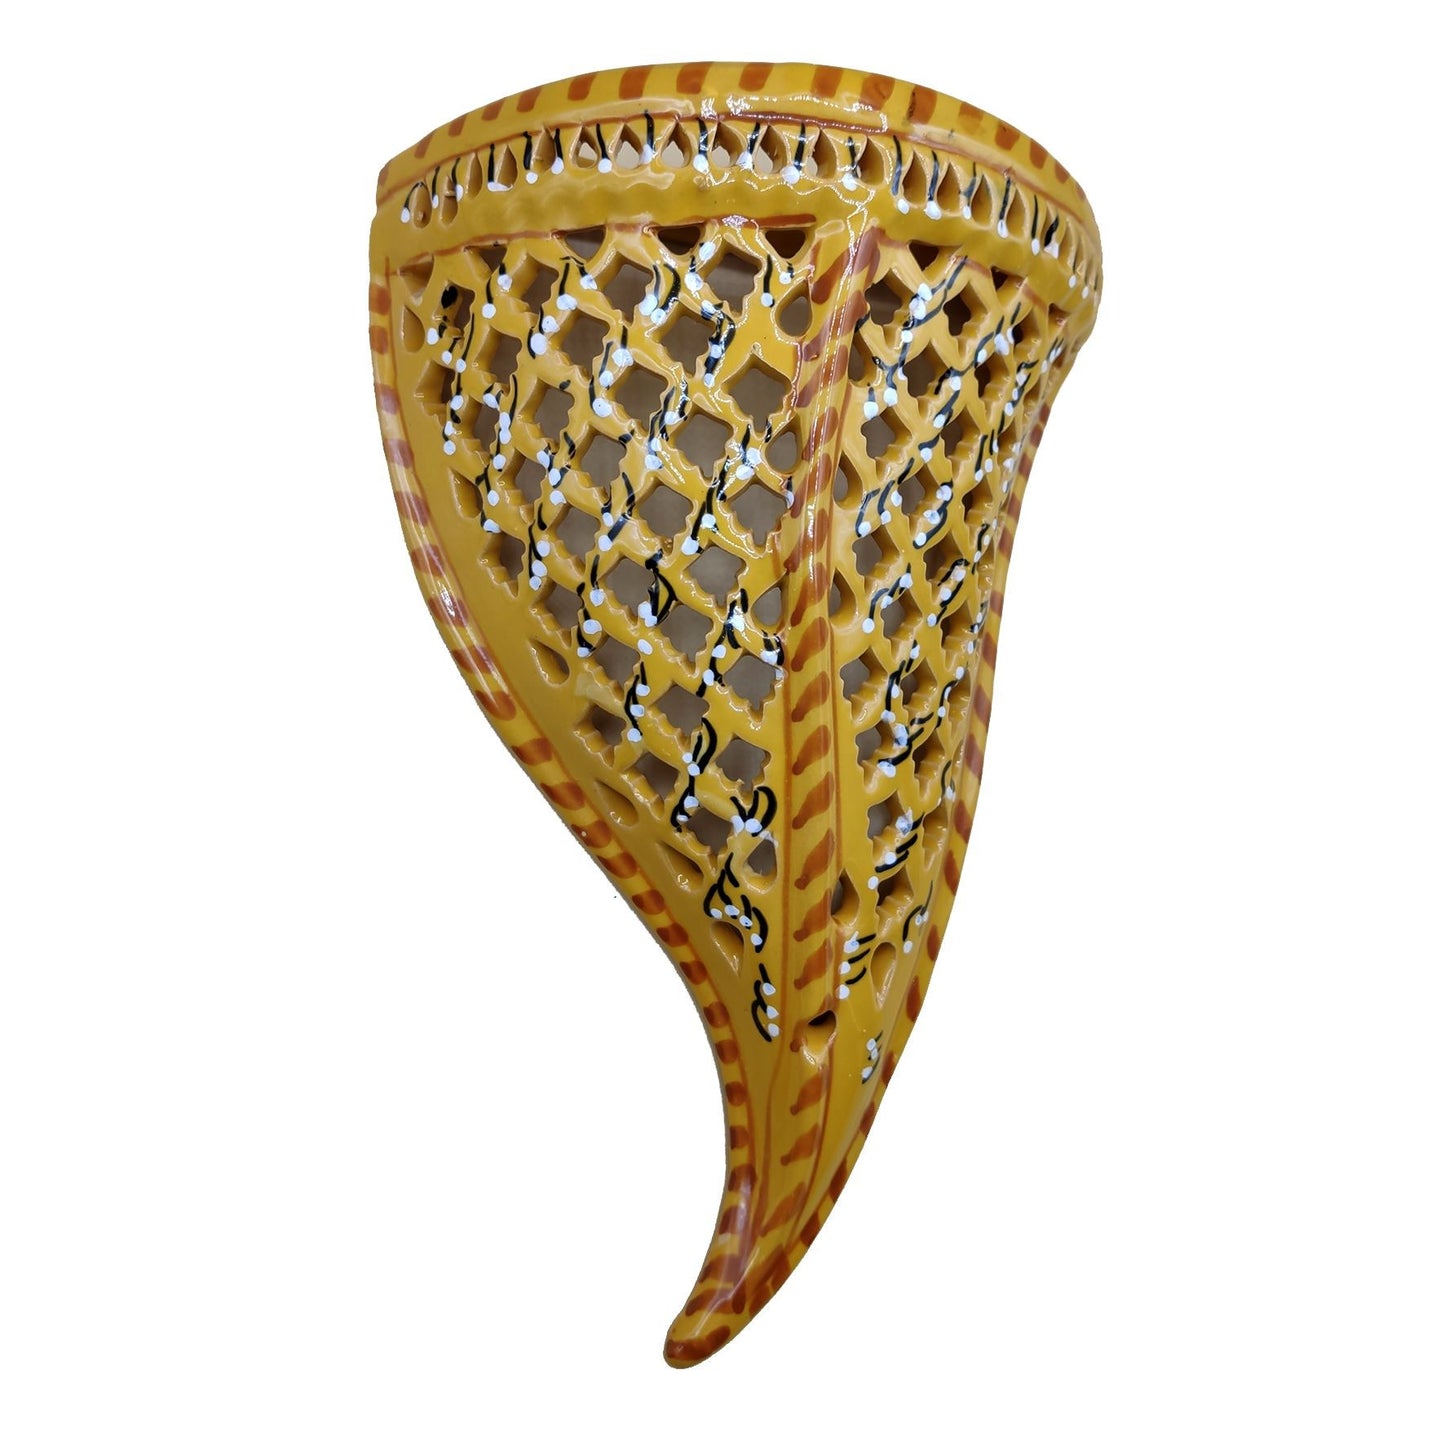 Arredo Etnico Applique Parete Lampada Ceramica Tunisina Marocchina 2511200906